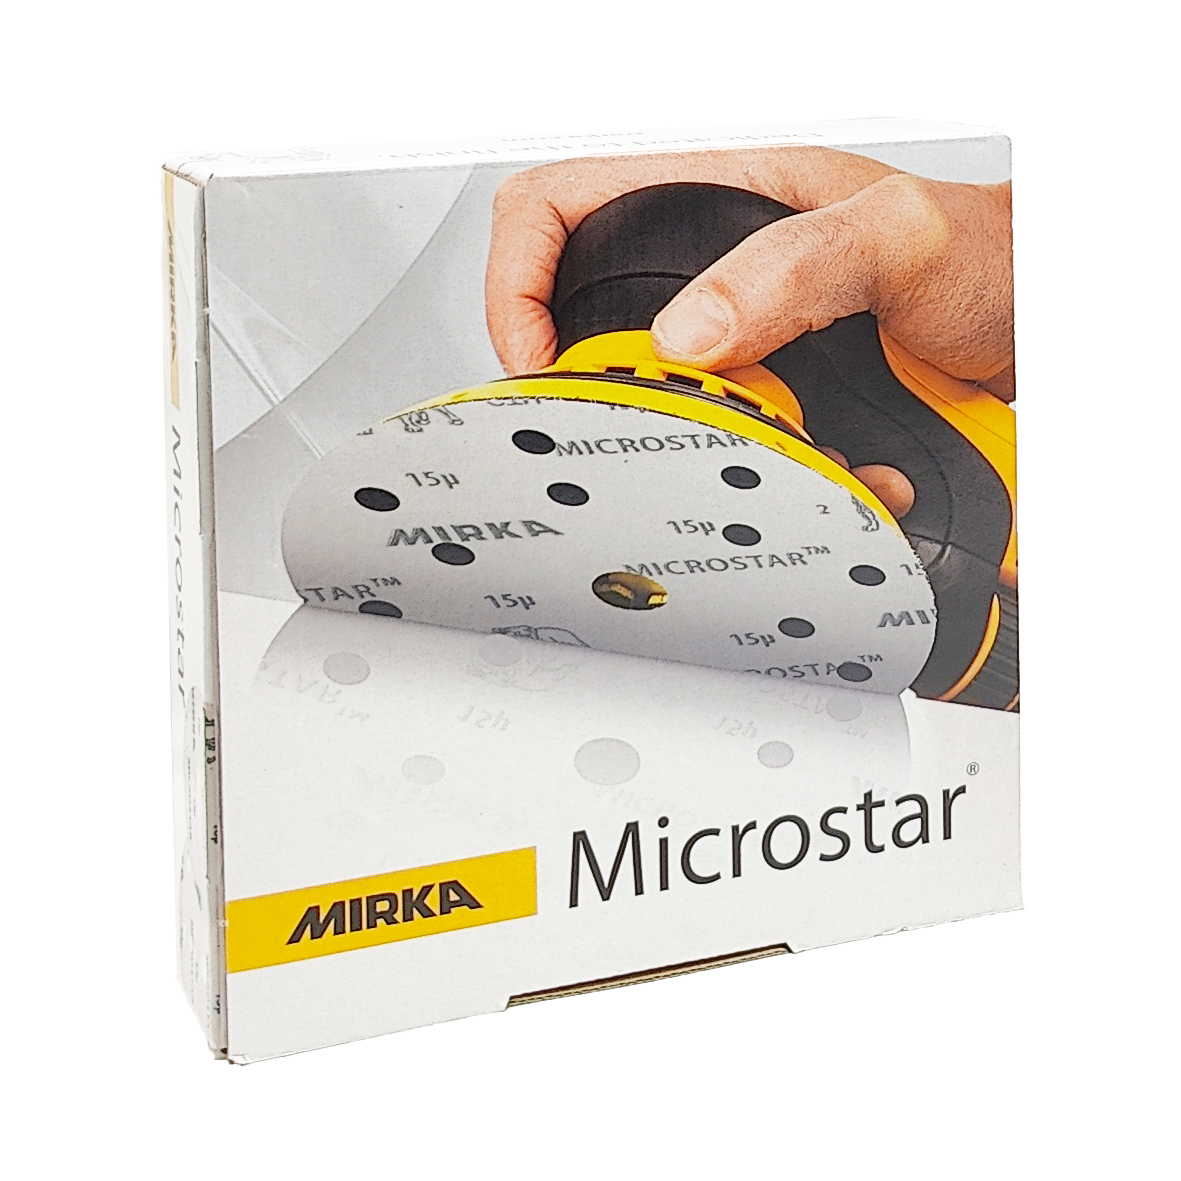 Abbildung Mirka Microstar 150mm Verpackung.